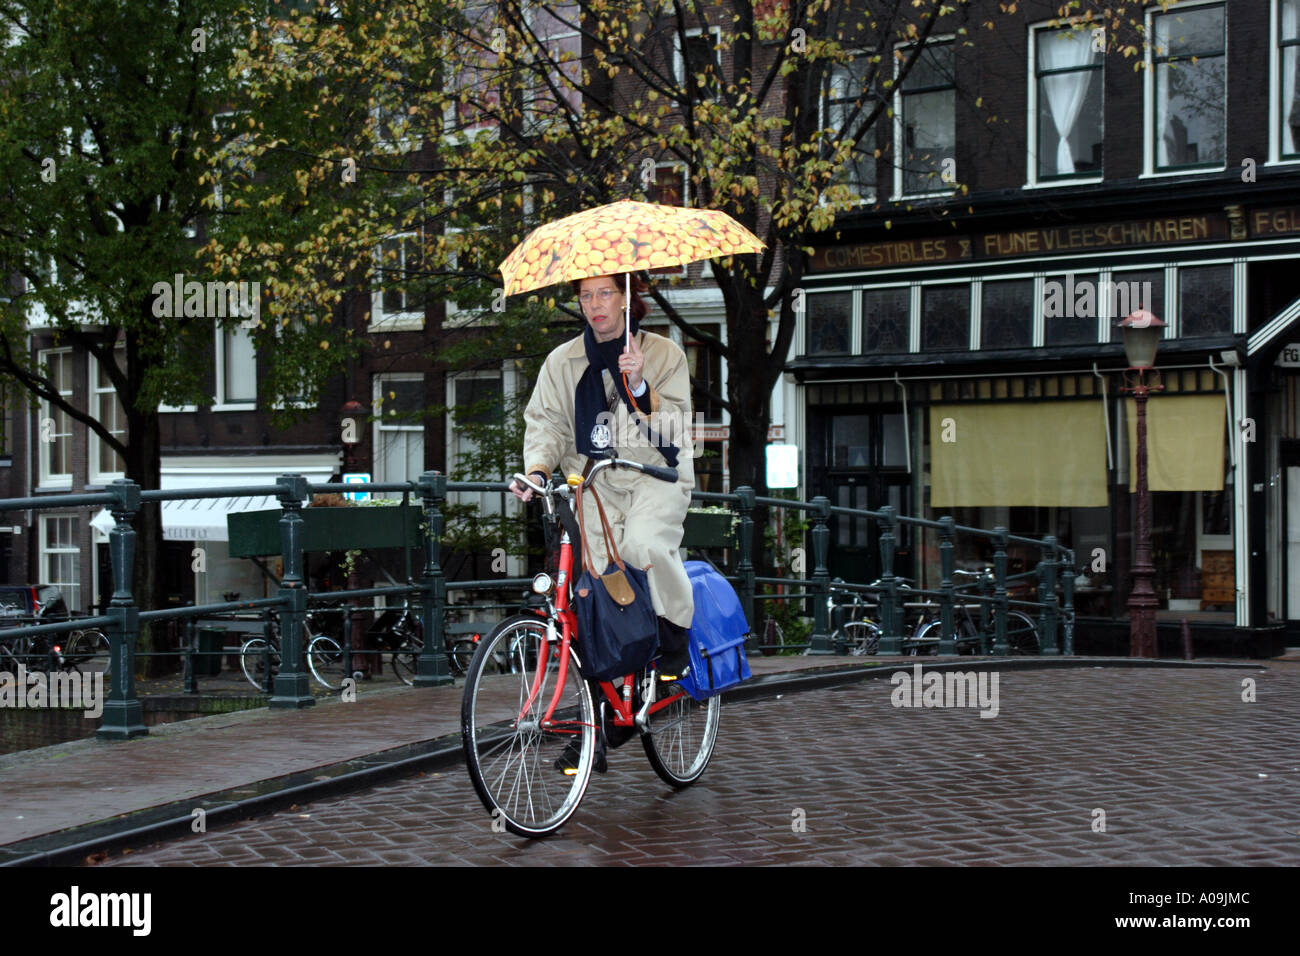 Frau mit Regenschirm Reiten Fahrrad Stockfotografie - Alamy